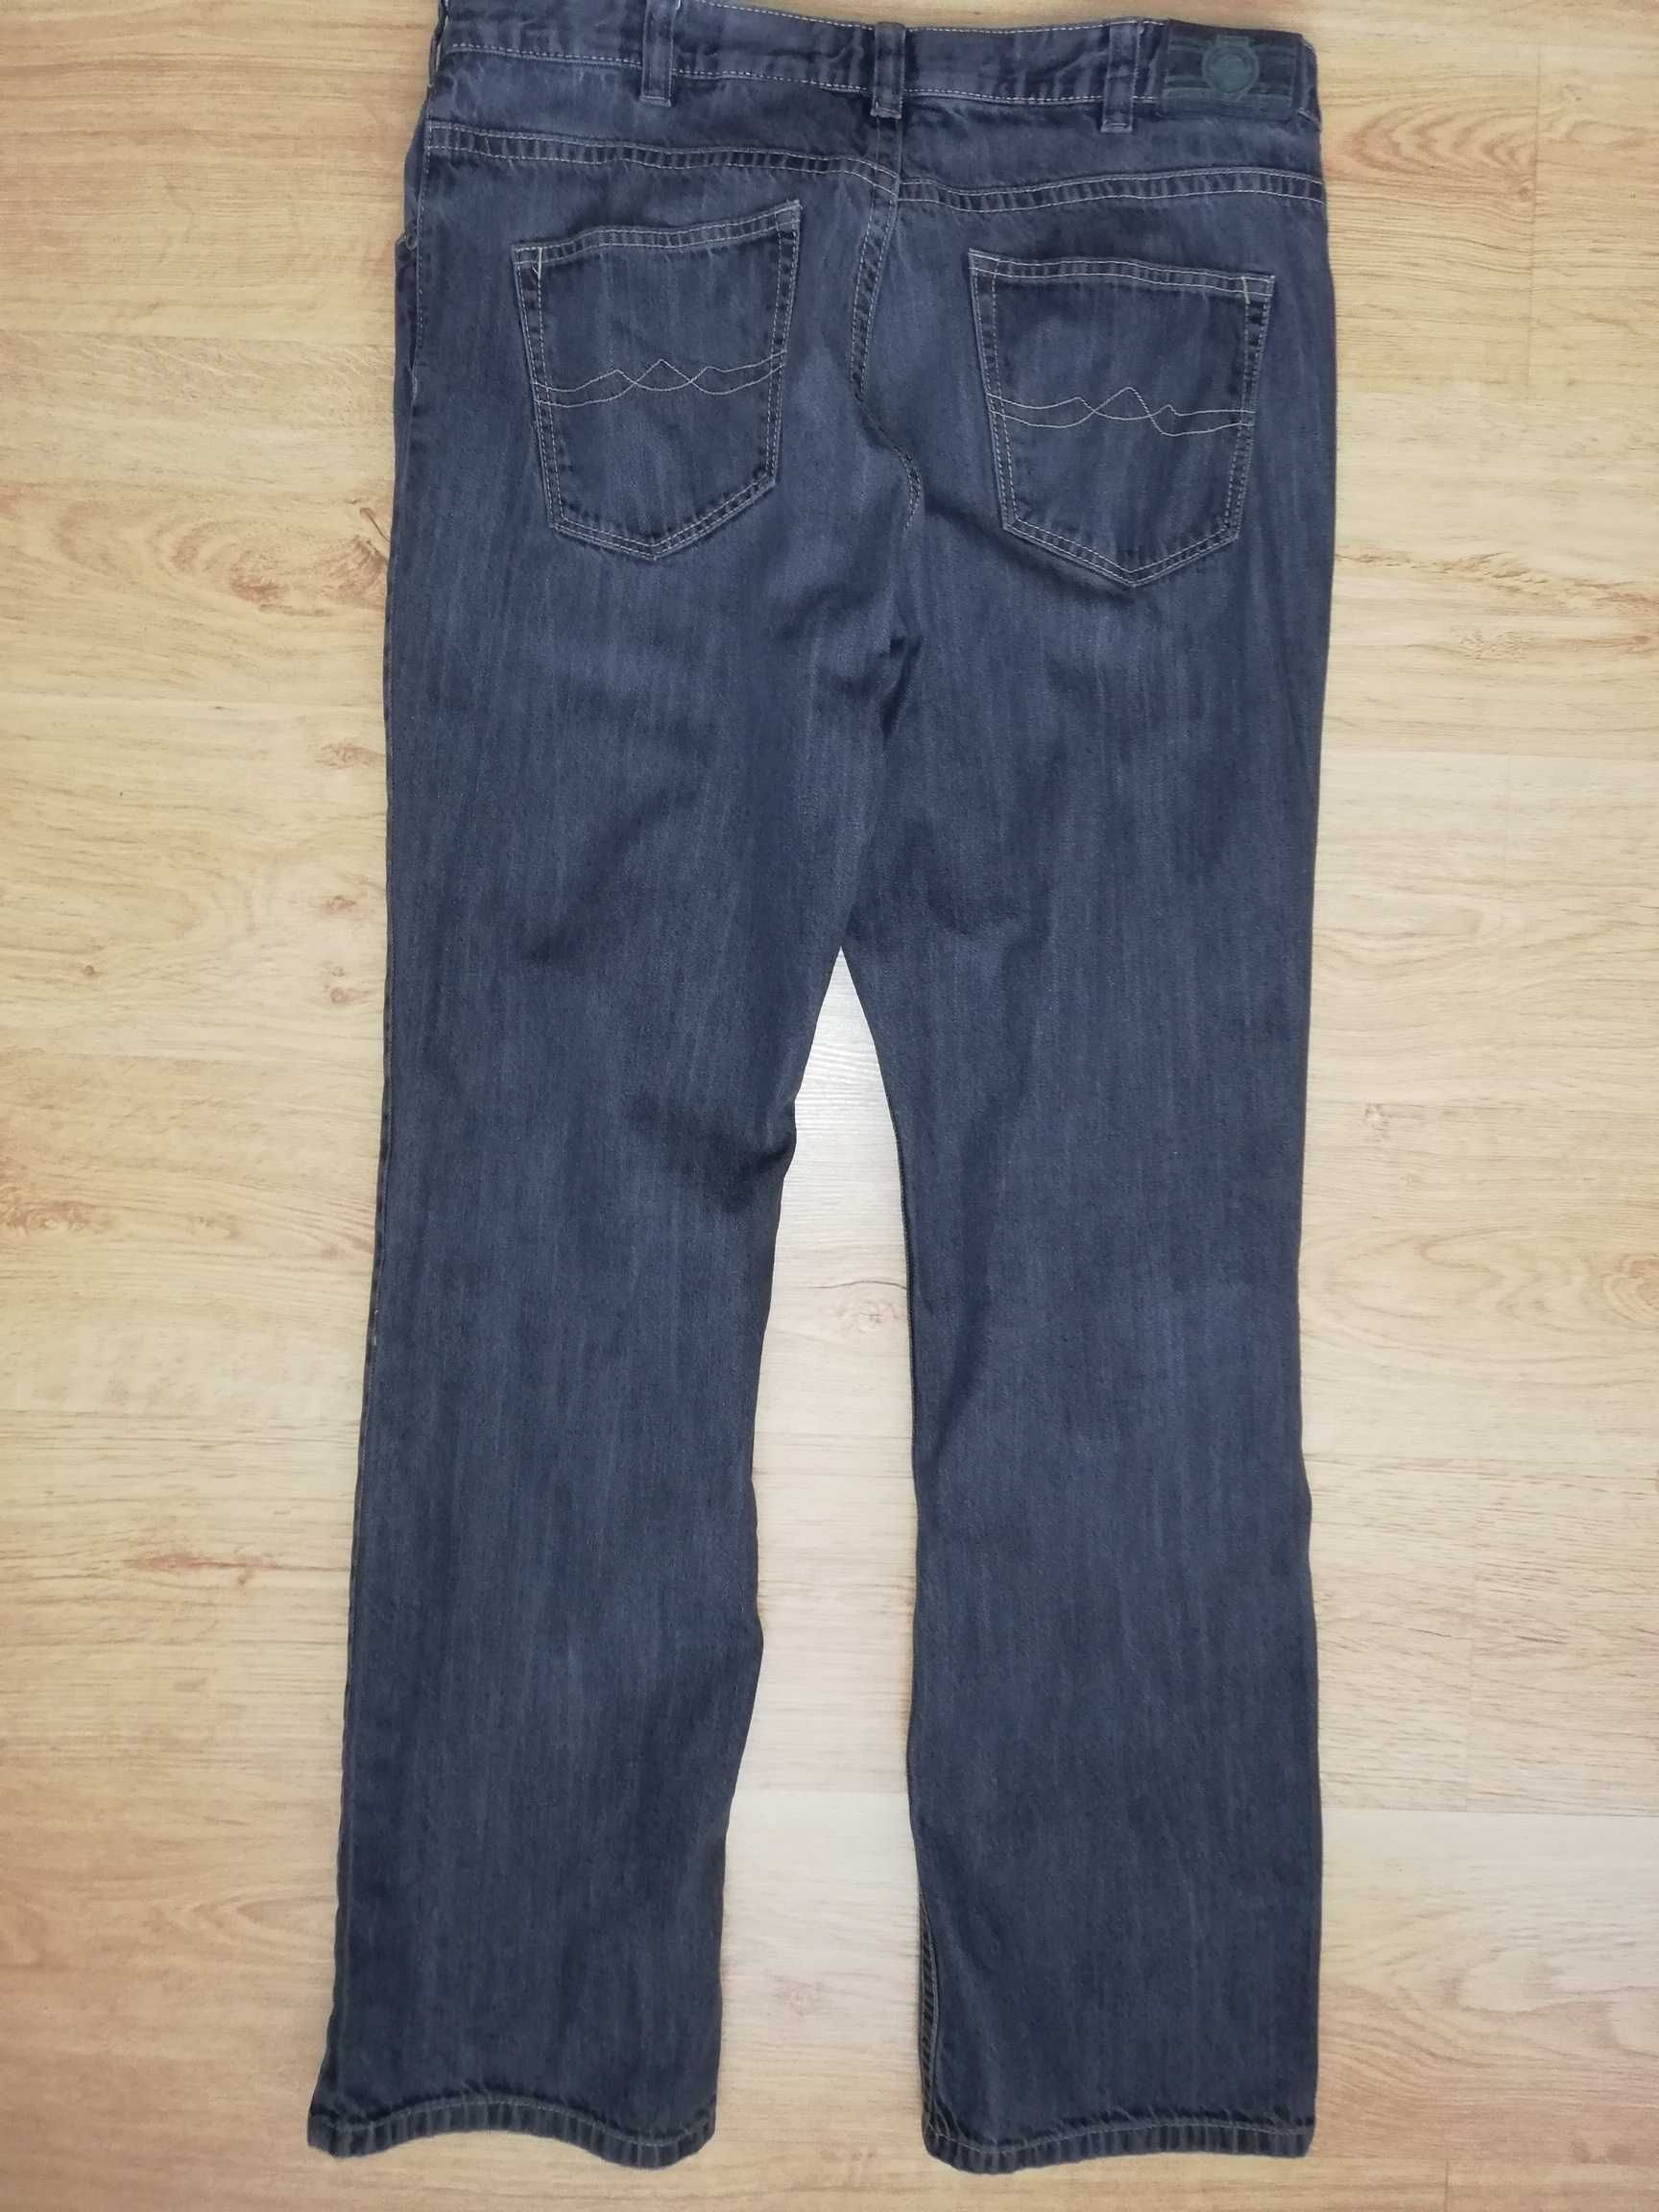 W38 L34 фірмові джинси на високий зріст JINGLERS by C&A (Німеччина)